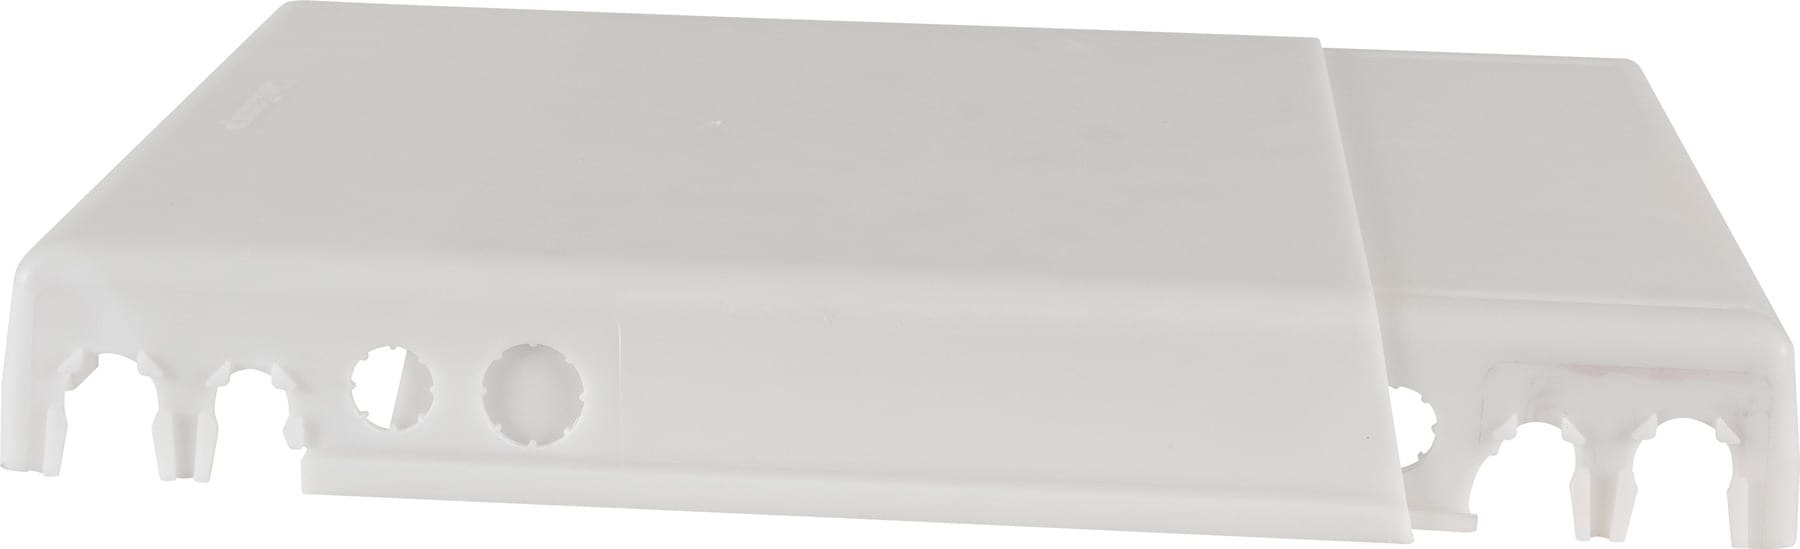 Unilamp - Uniboks innfellingsboks justerbar for downlight lav